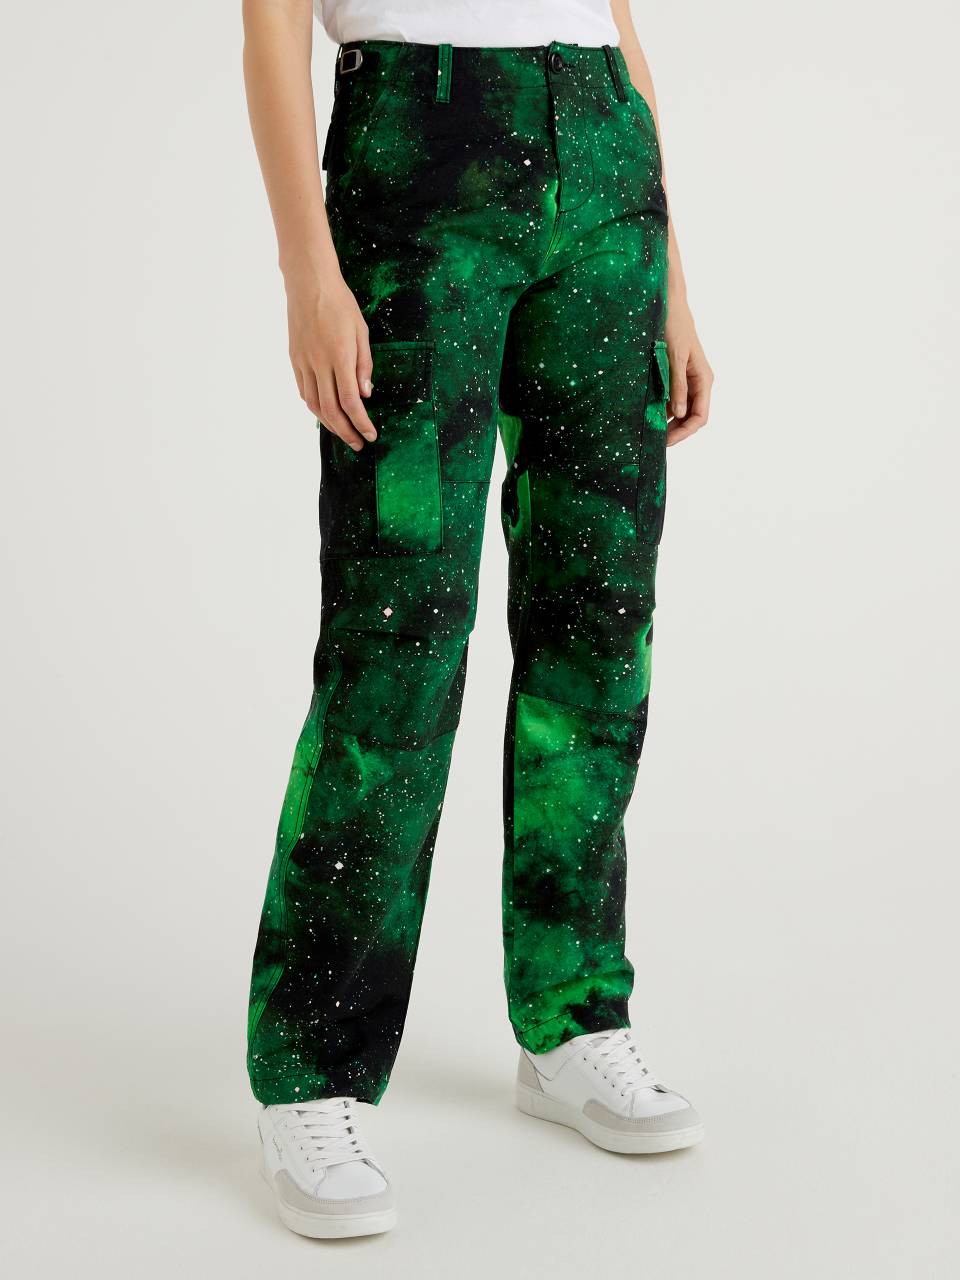 Benetton Space pattern cargo trousers by Ghali. 1